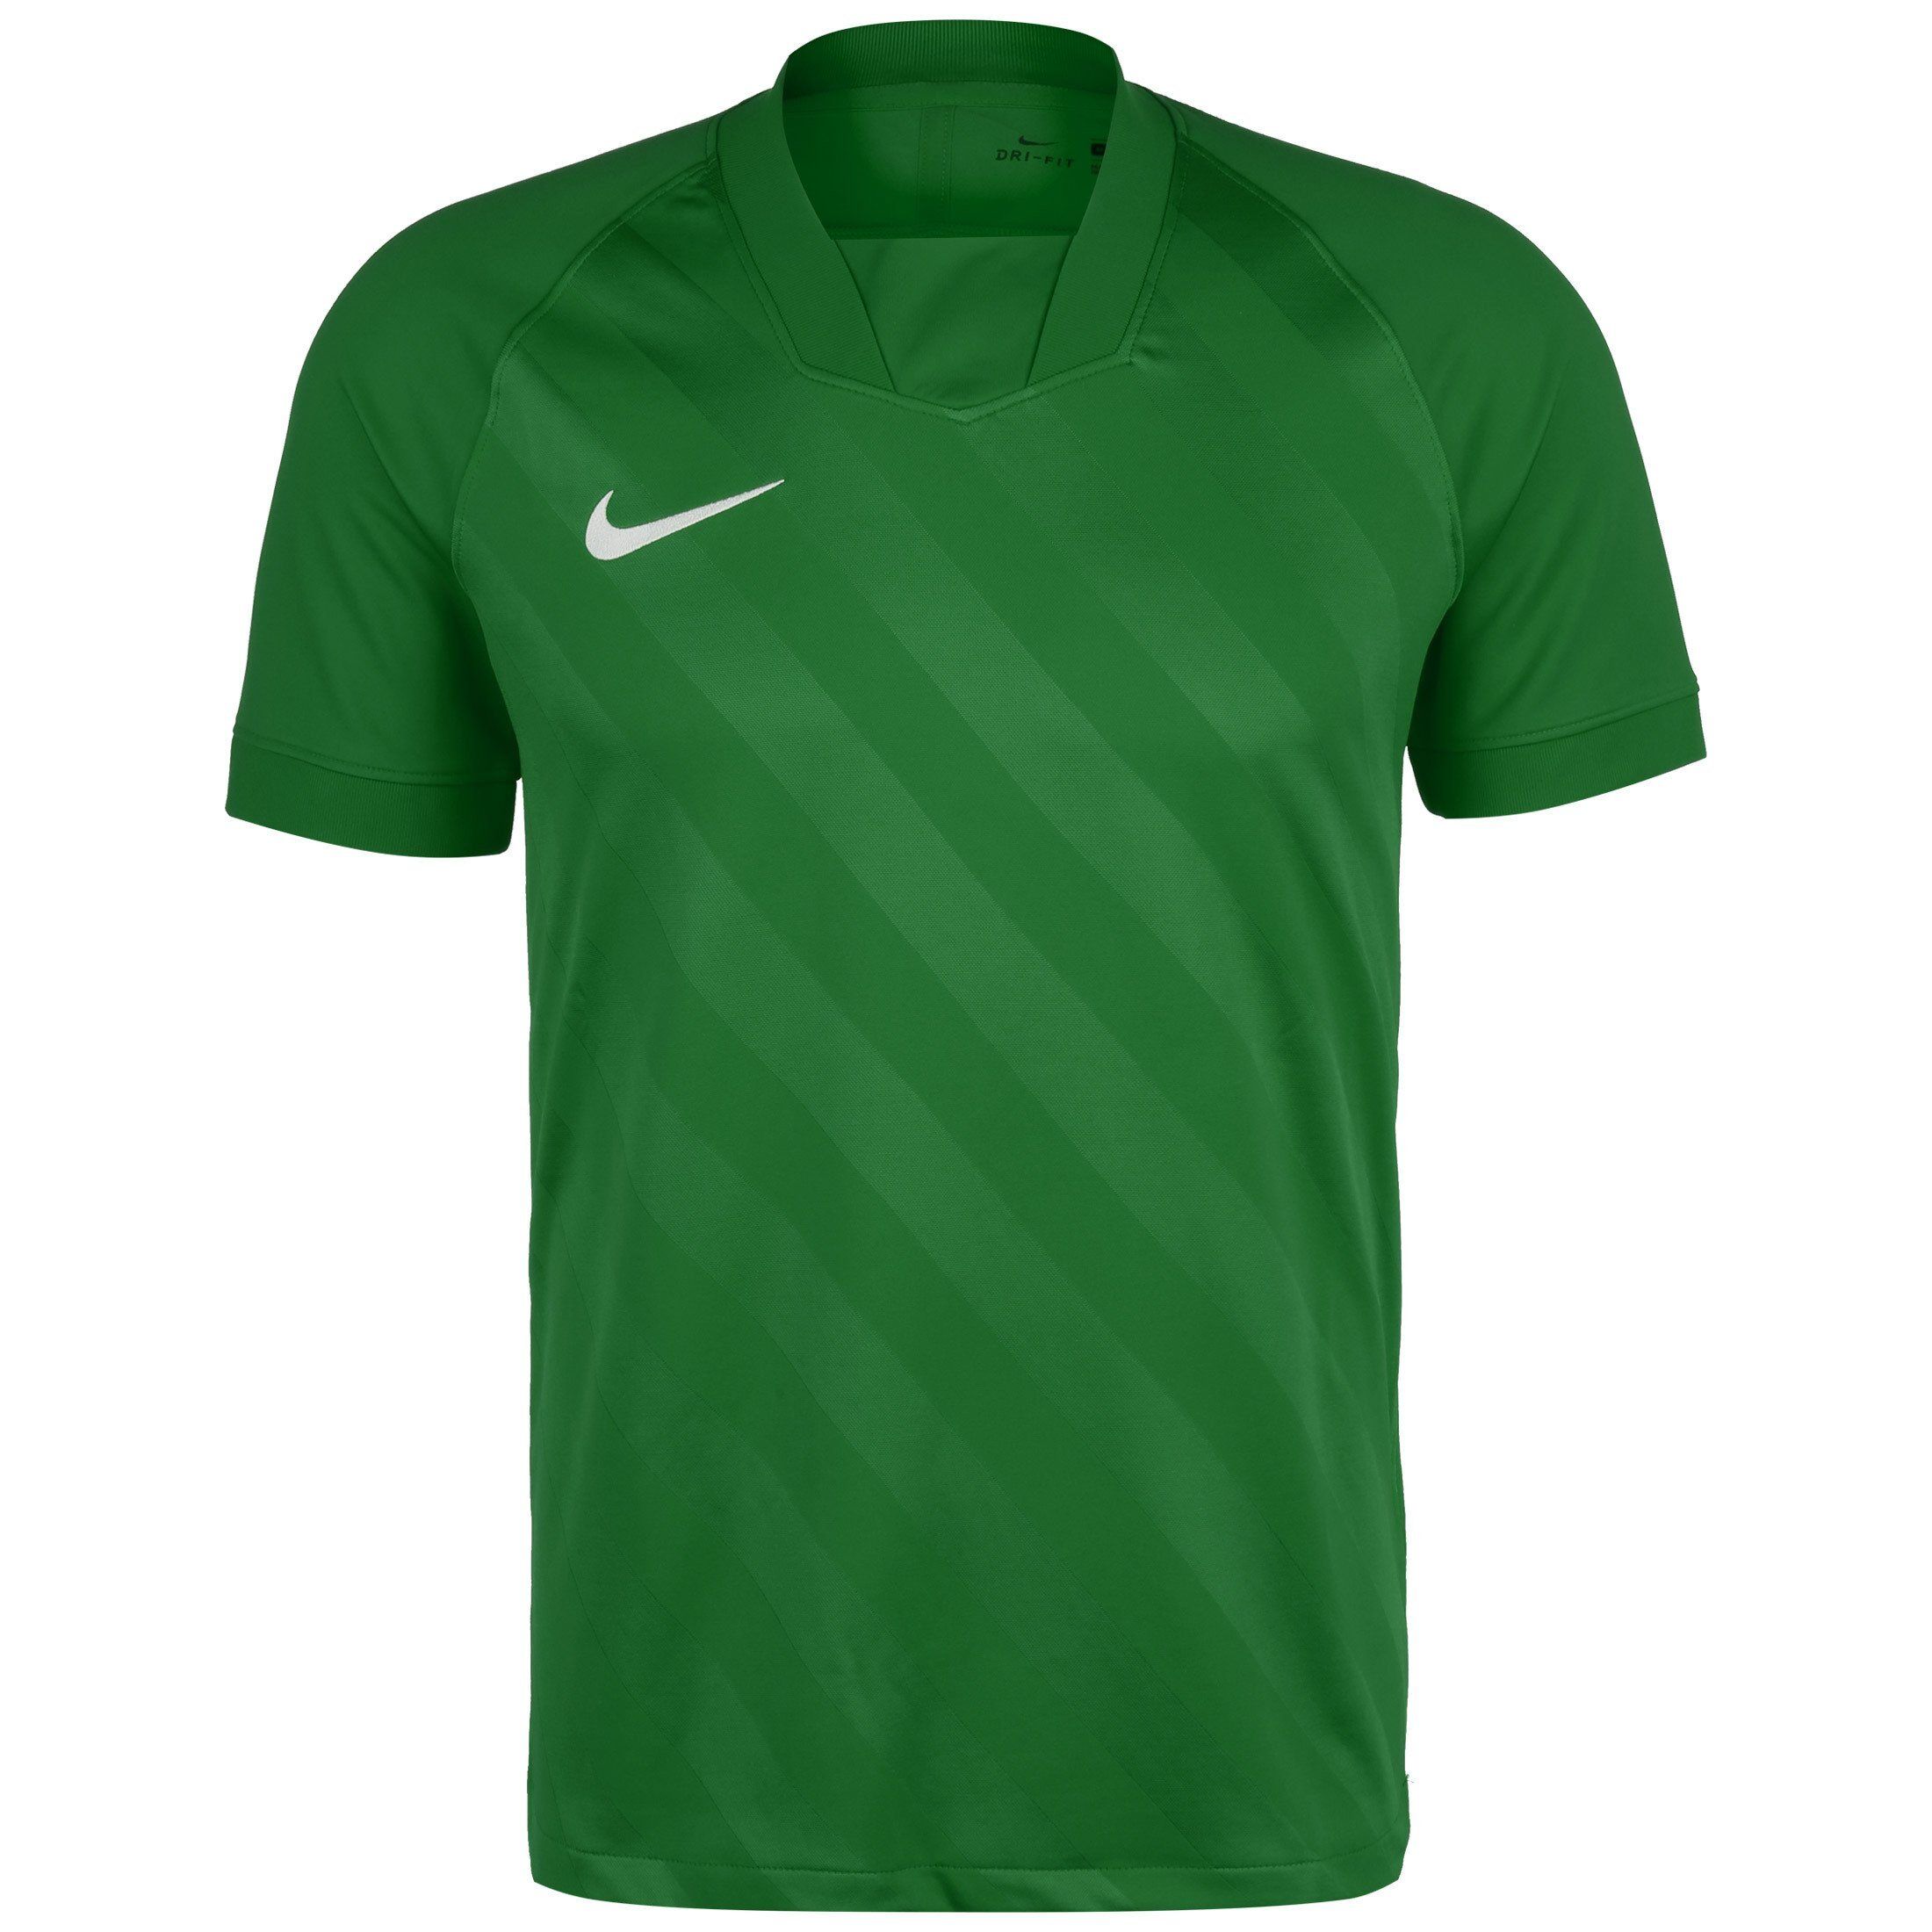 Nike Fußballtrikot »Challenge Iii«, pine green / pine green / white